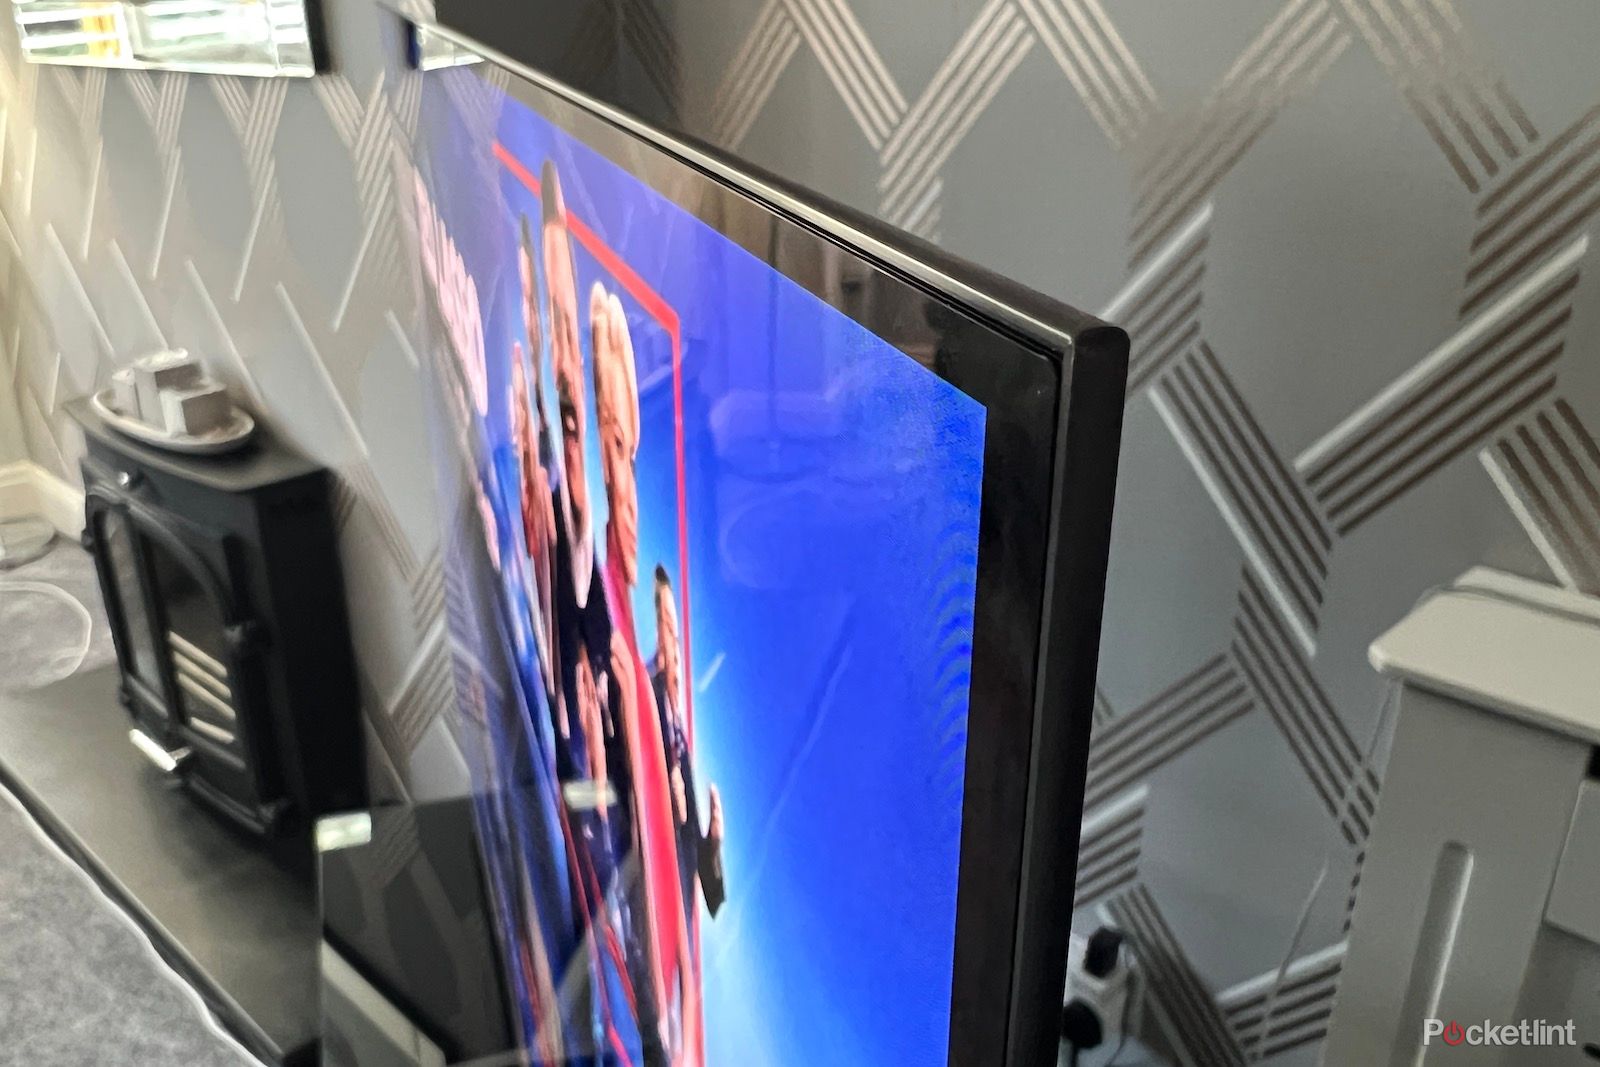 Buy Samsung 55 Inch OLED 4K Smart TV - S90C